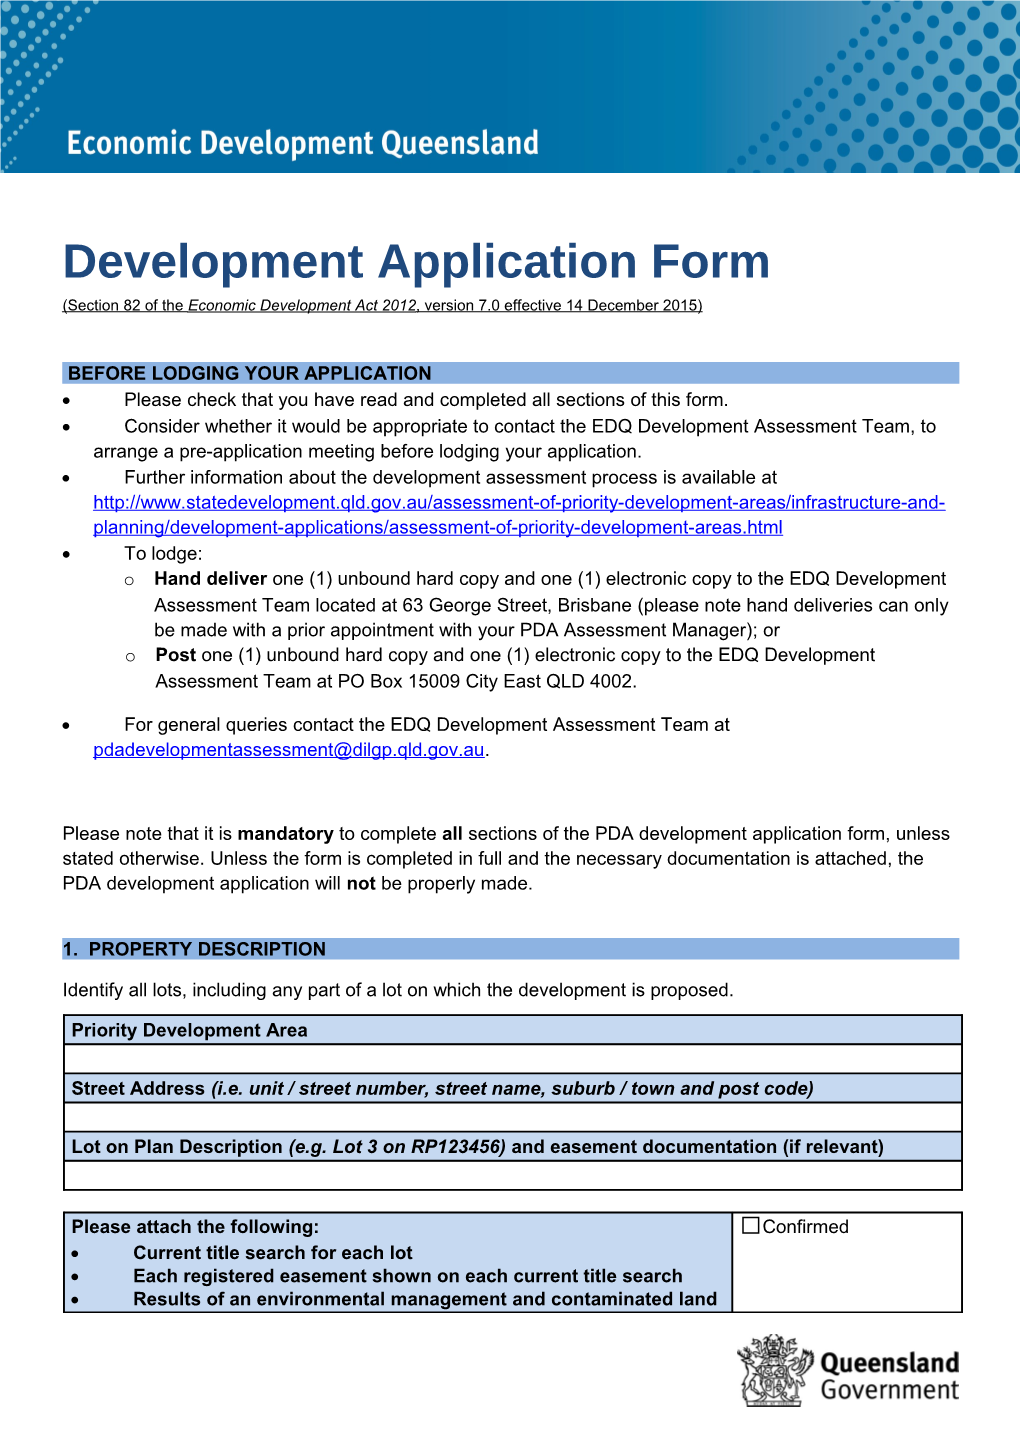 Development Application Form